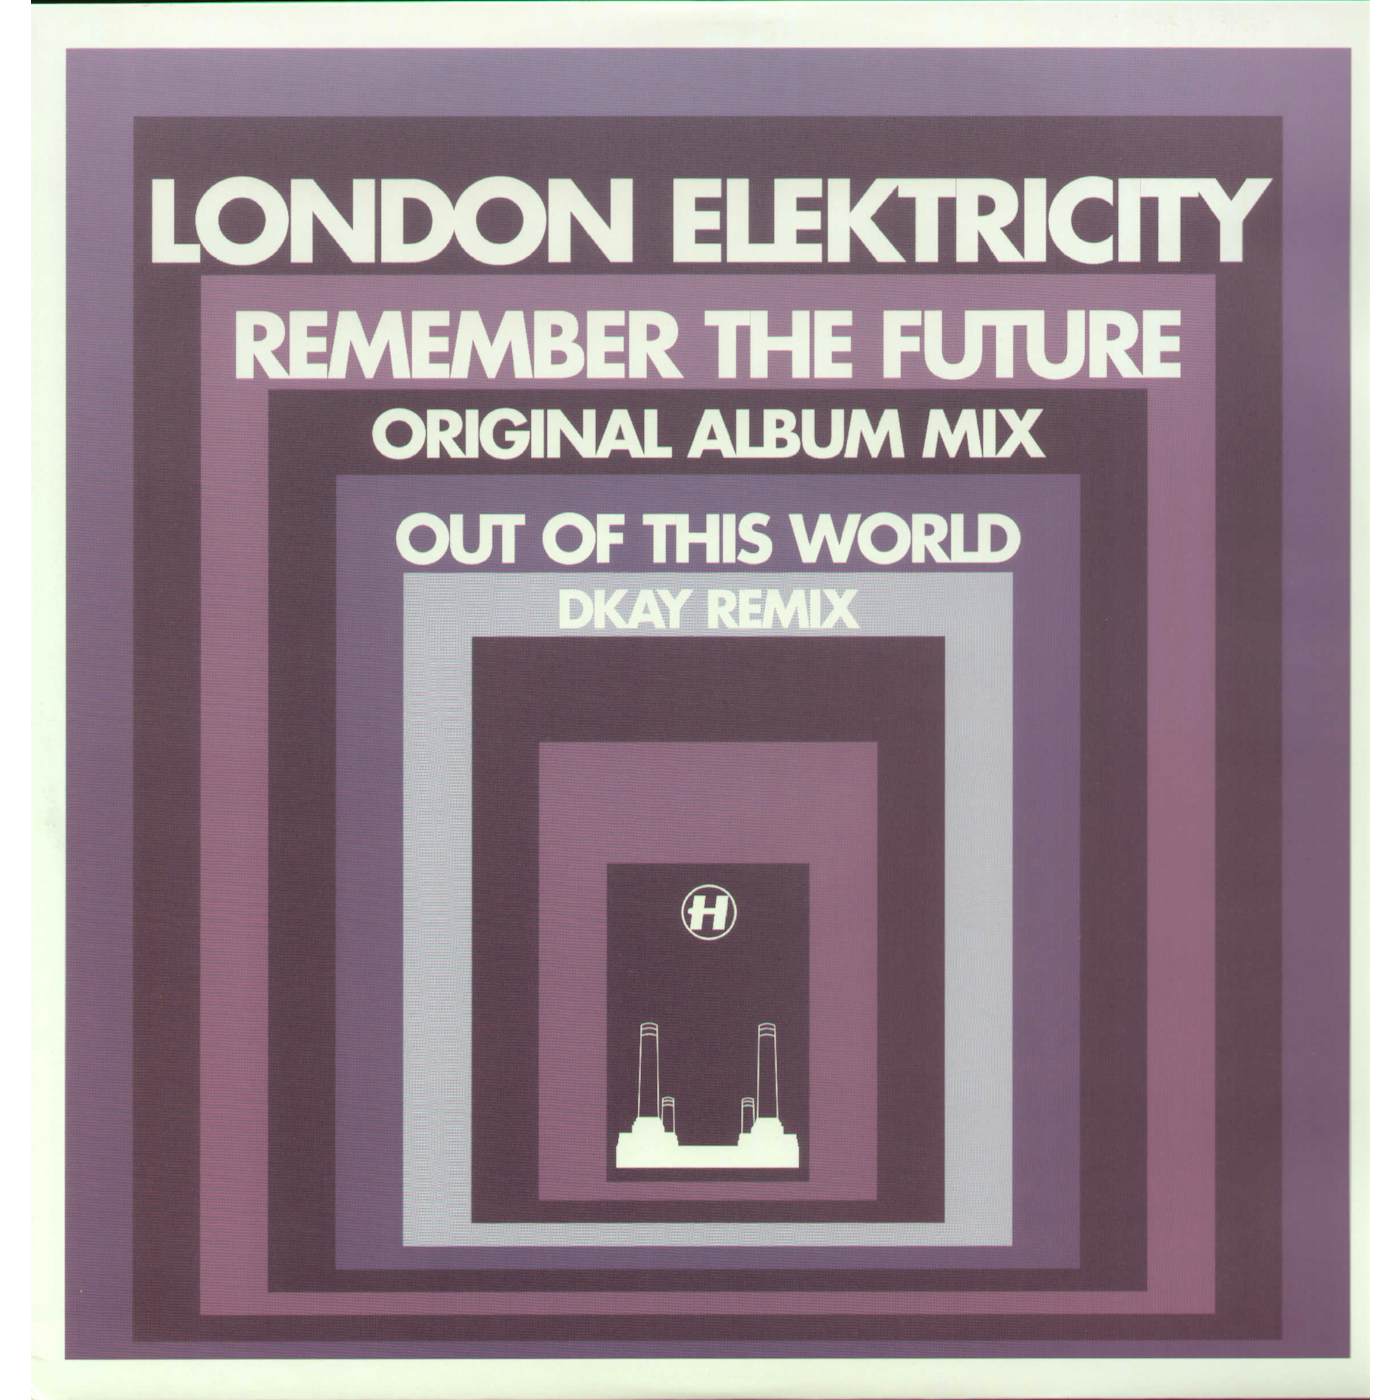 London Elektricity REMEMBER THE FUTURE Vinyl Record